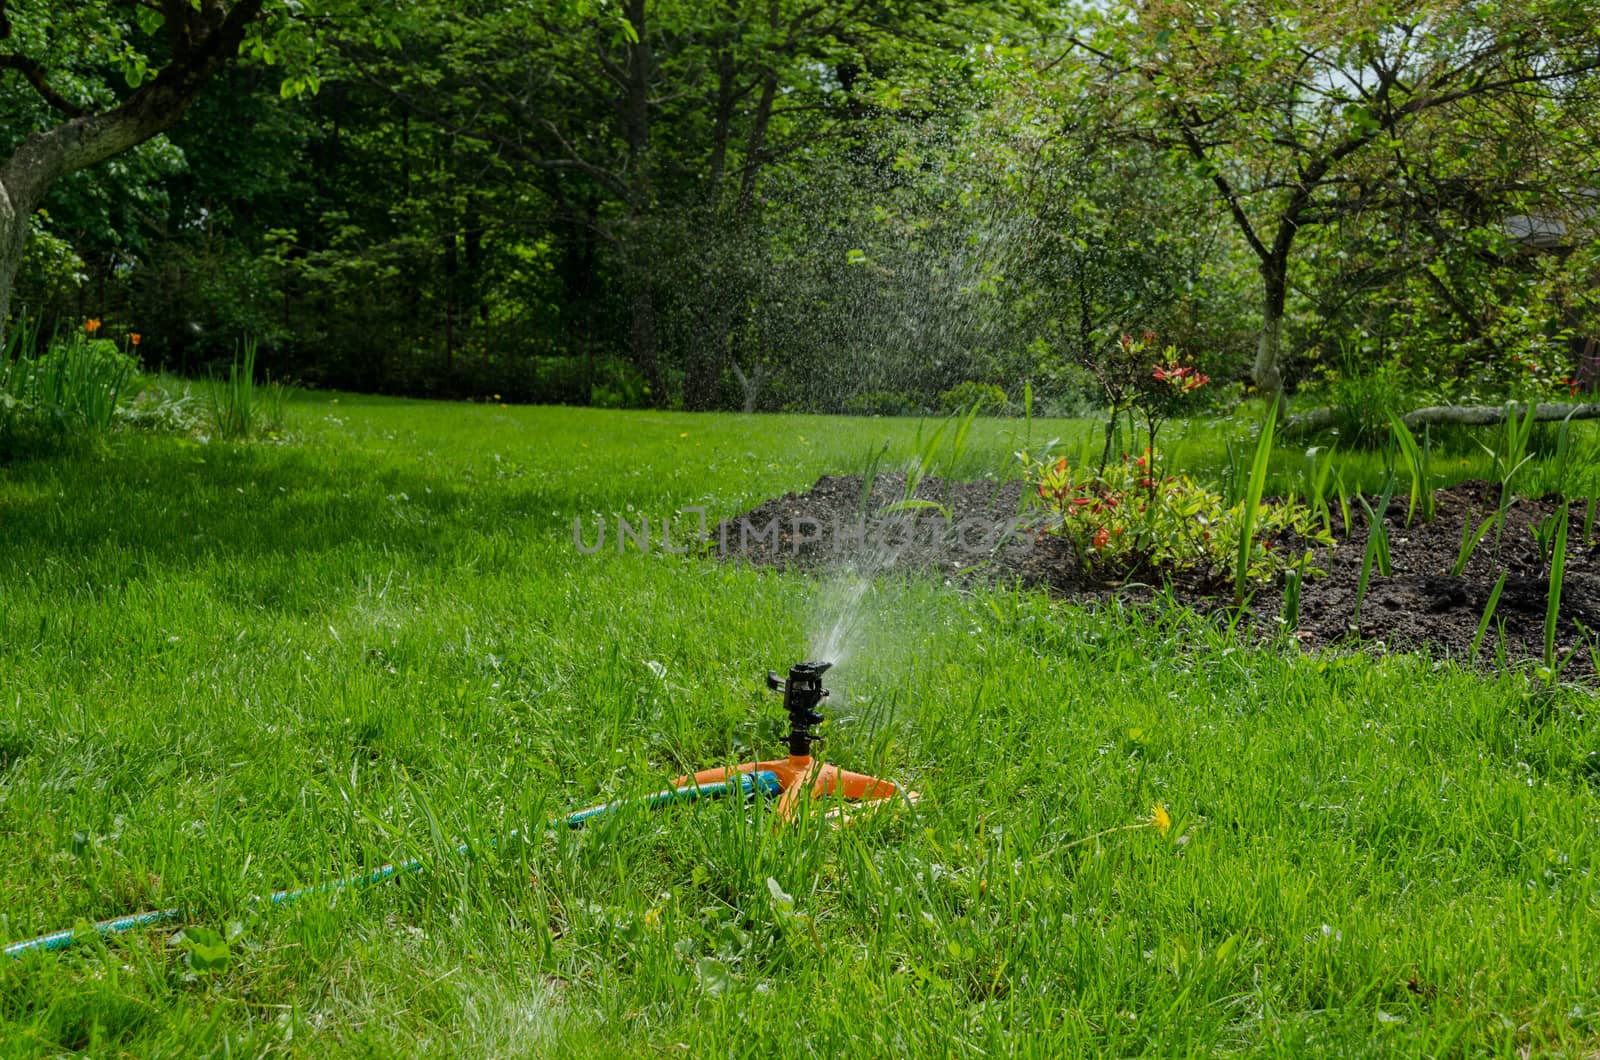 sprinkling irrigation on the grass by sauletas